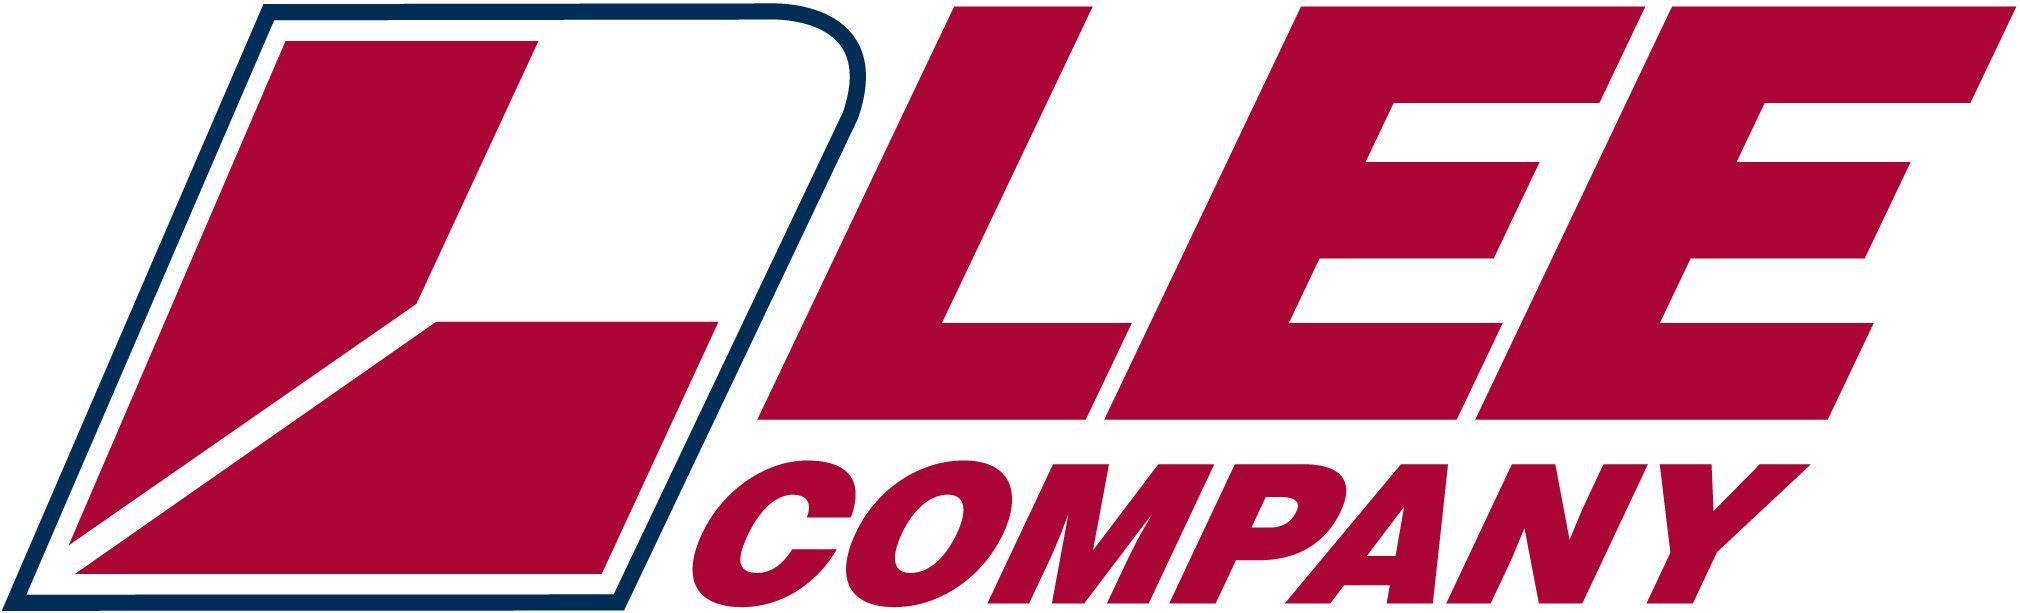 Lee Company Logo - Lee Company. Nashville Area Chamber of Commerce